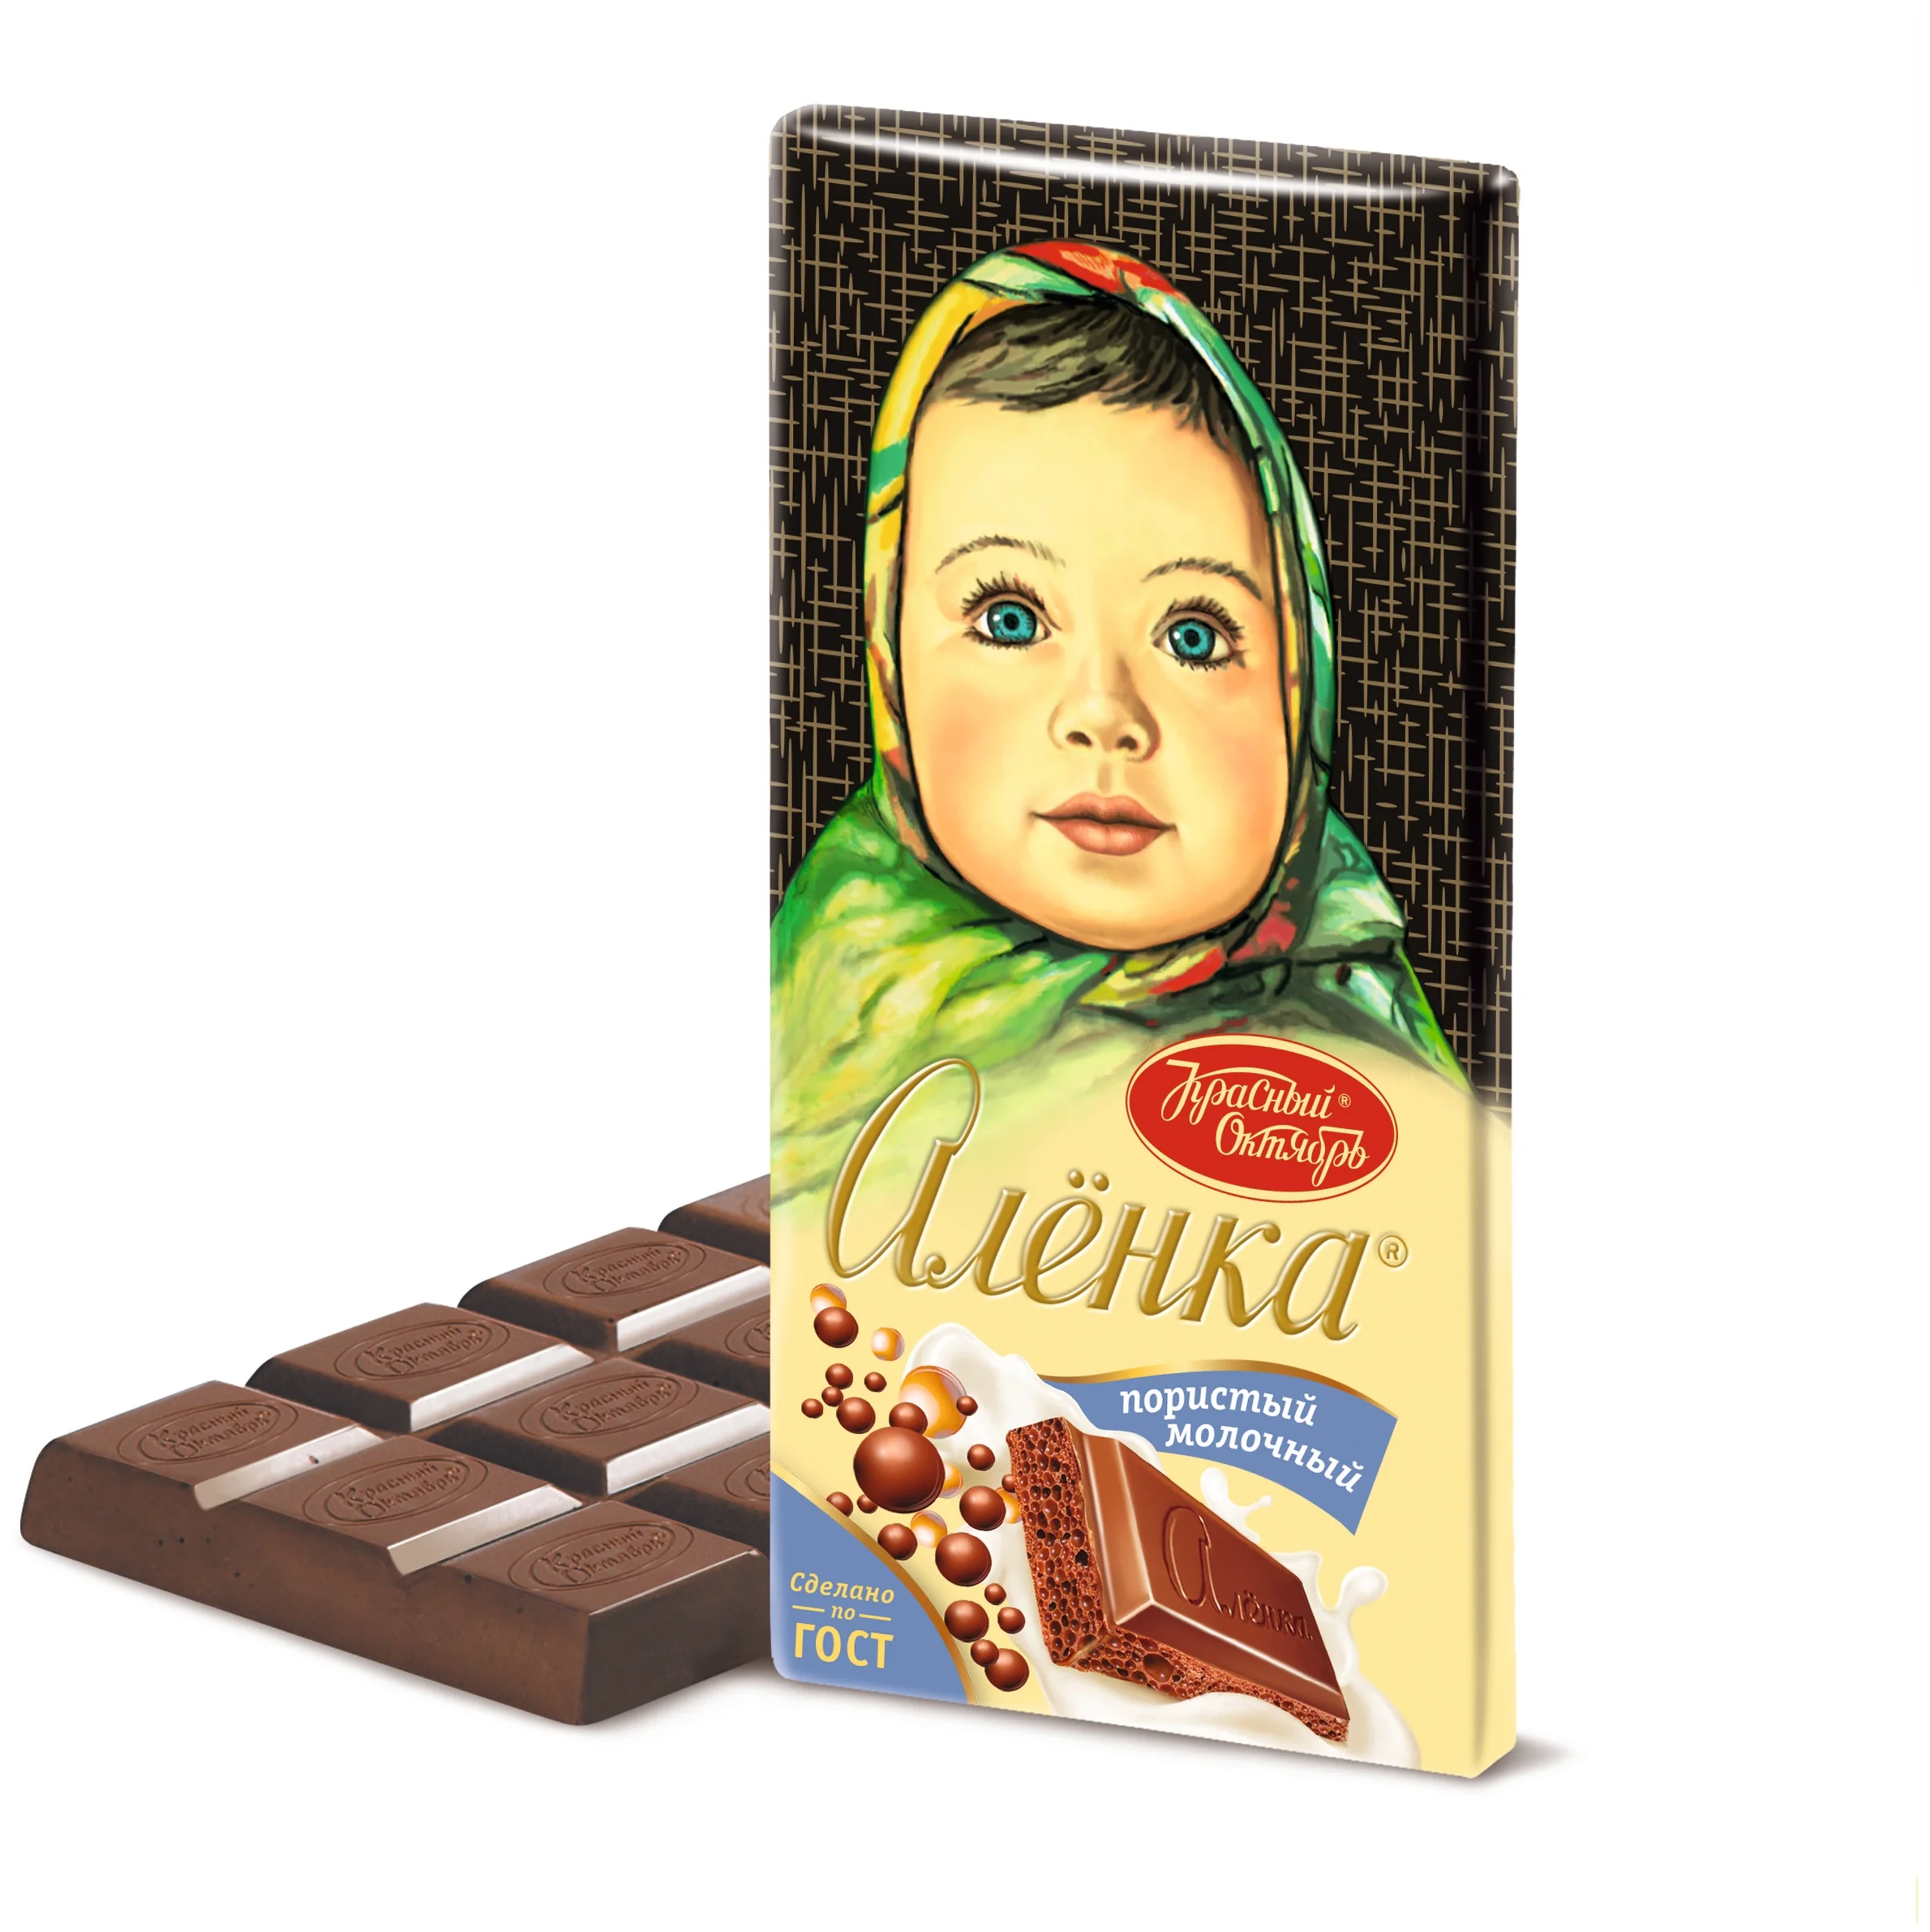 Алёнка "Пористый" - вид шоколада: молочный, пористый